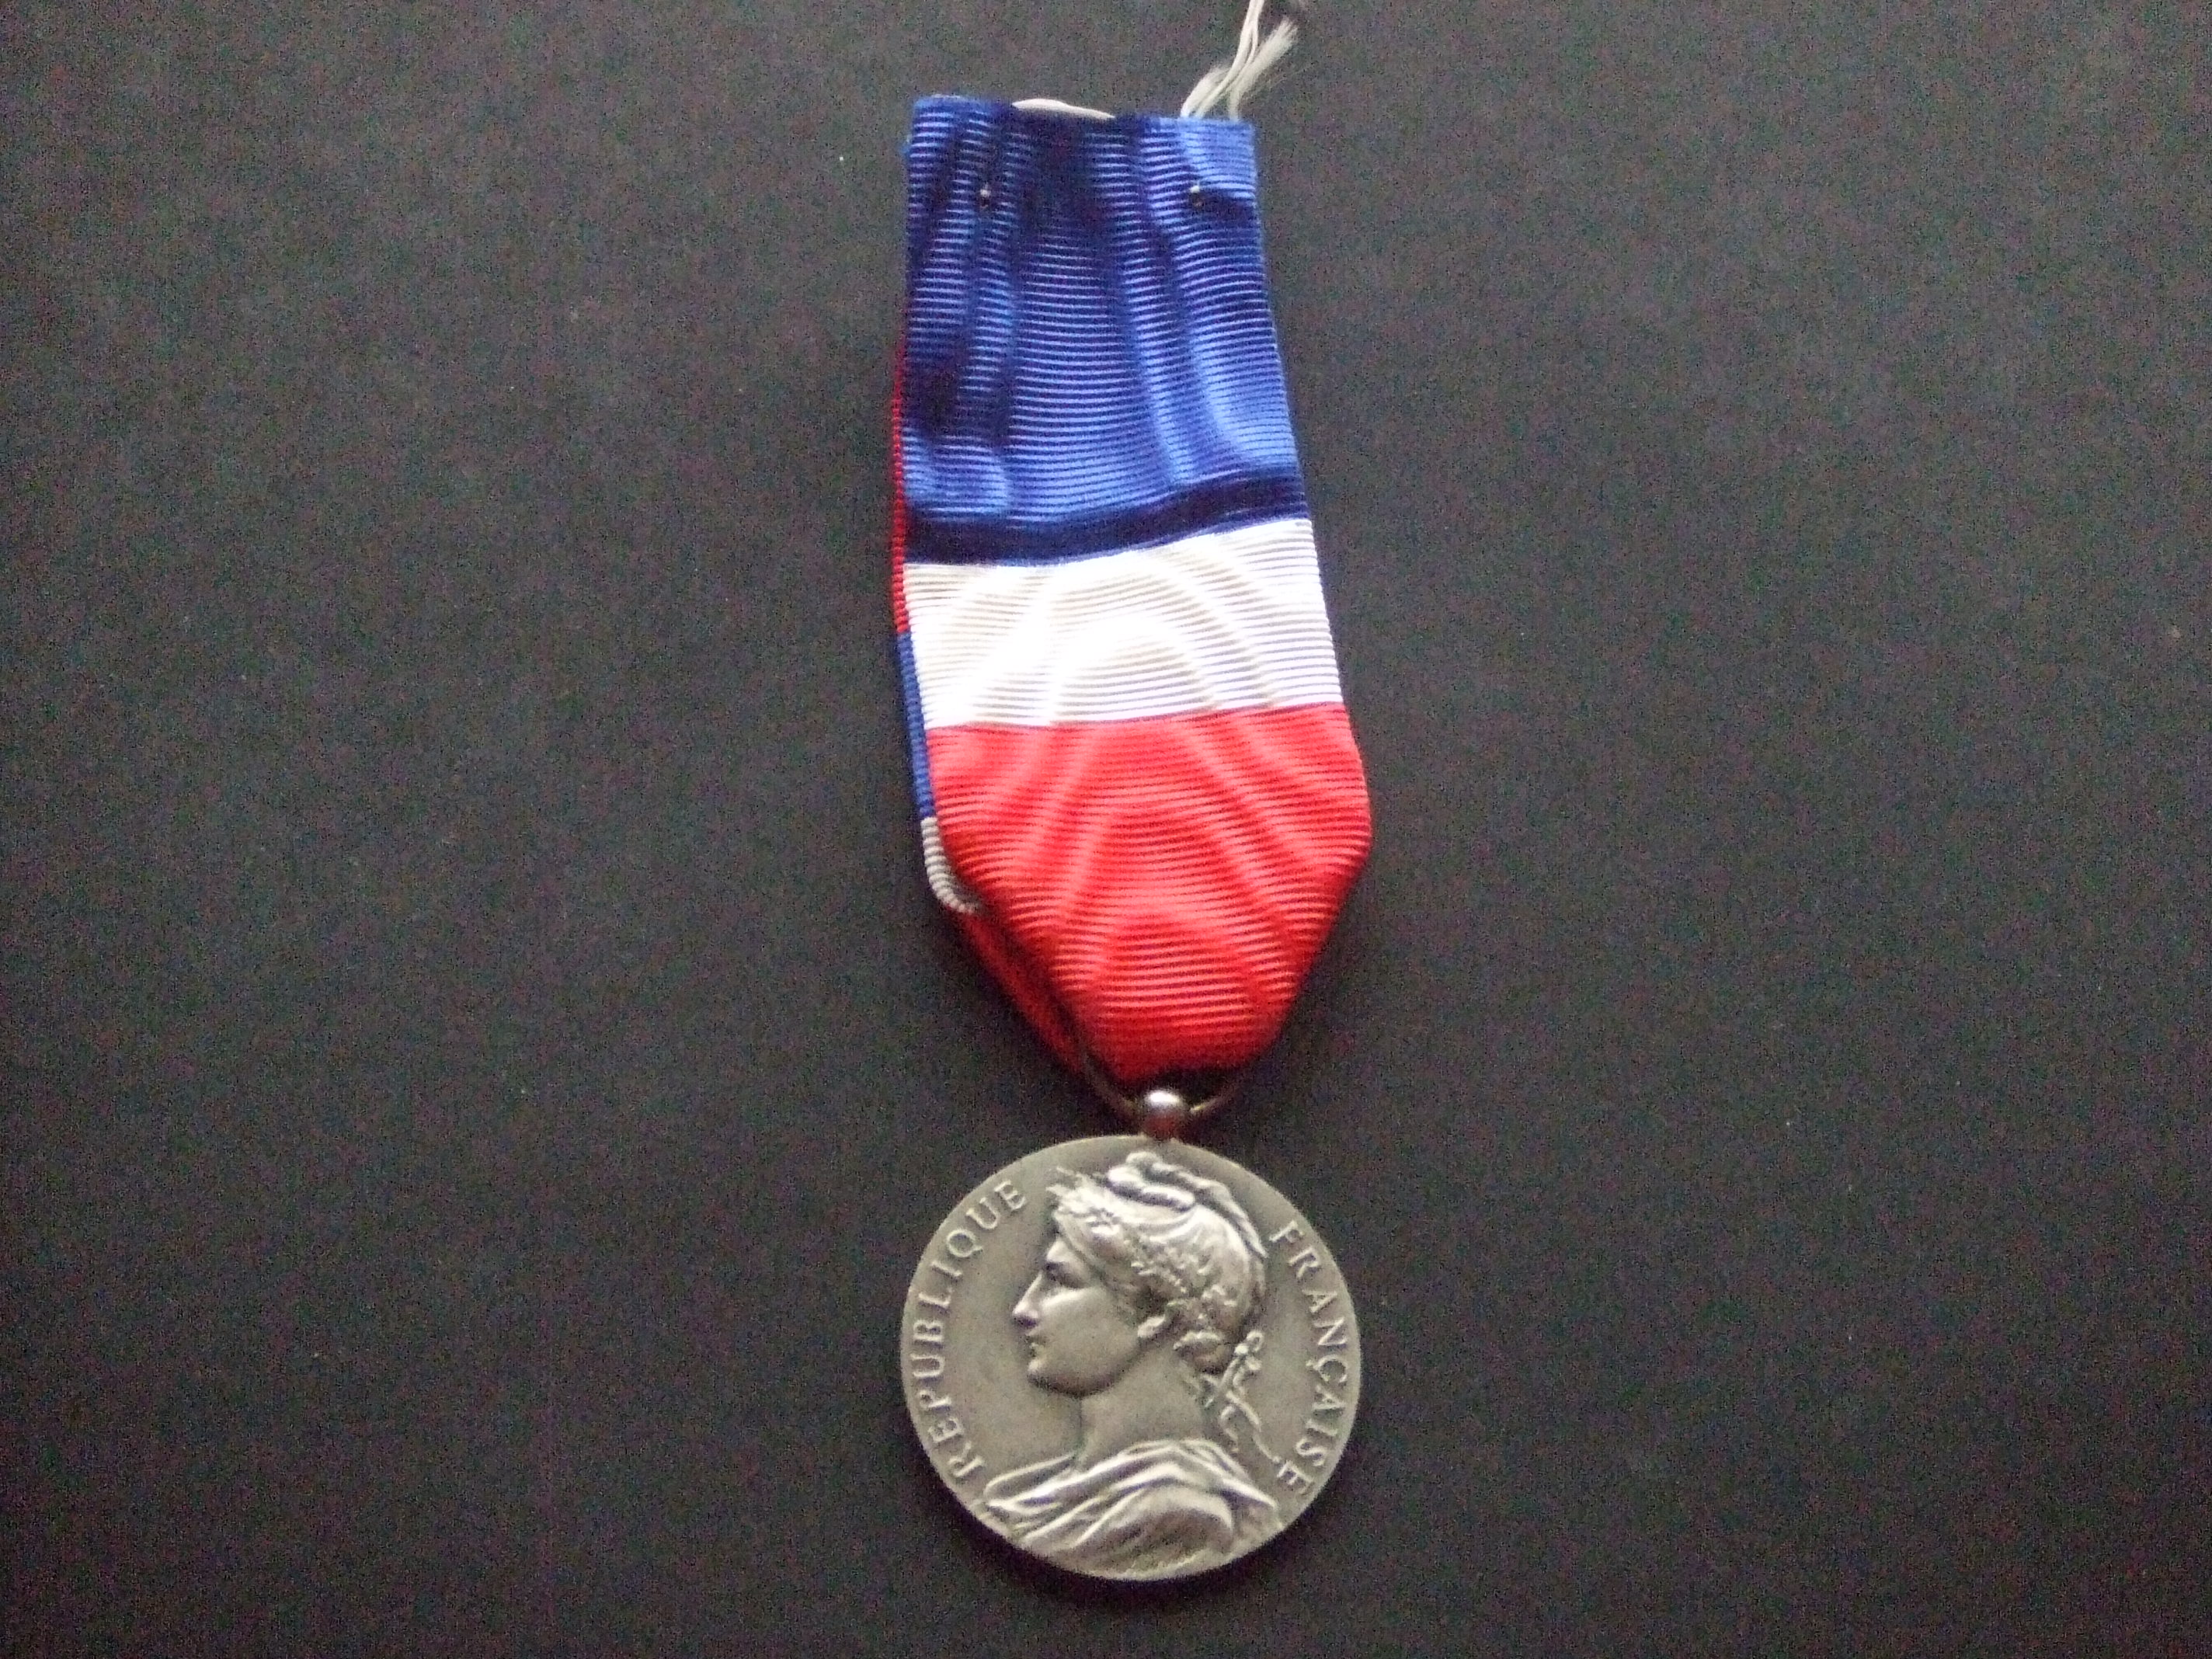 Honneur Travail A. Woussen lid van verdienste Frankrijk 1961 (3)